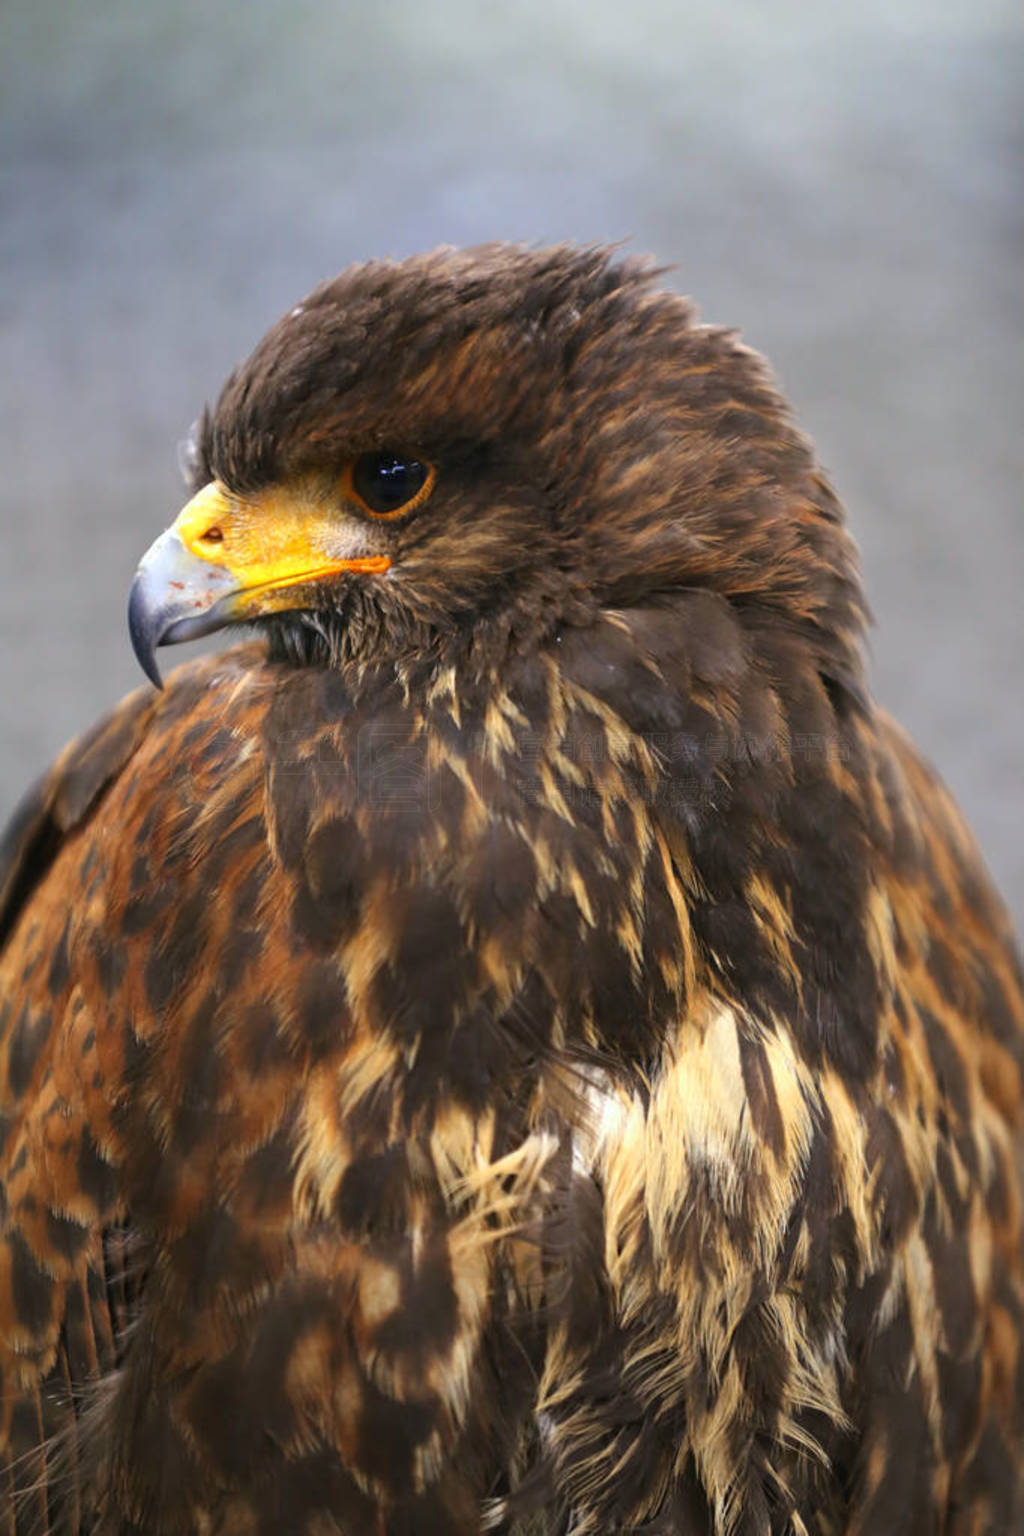 Photo of a Harris's hawk headshot portrait close up